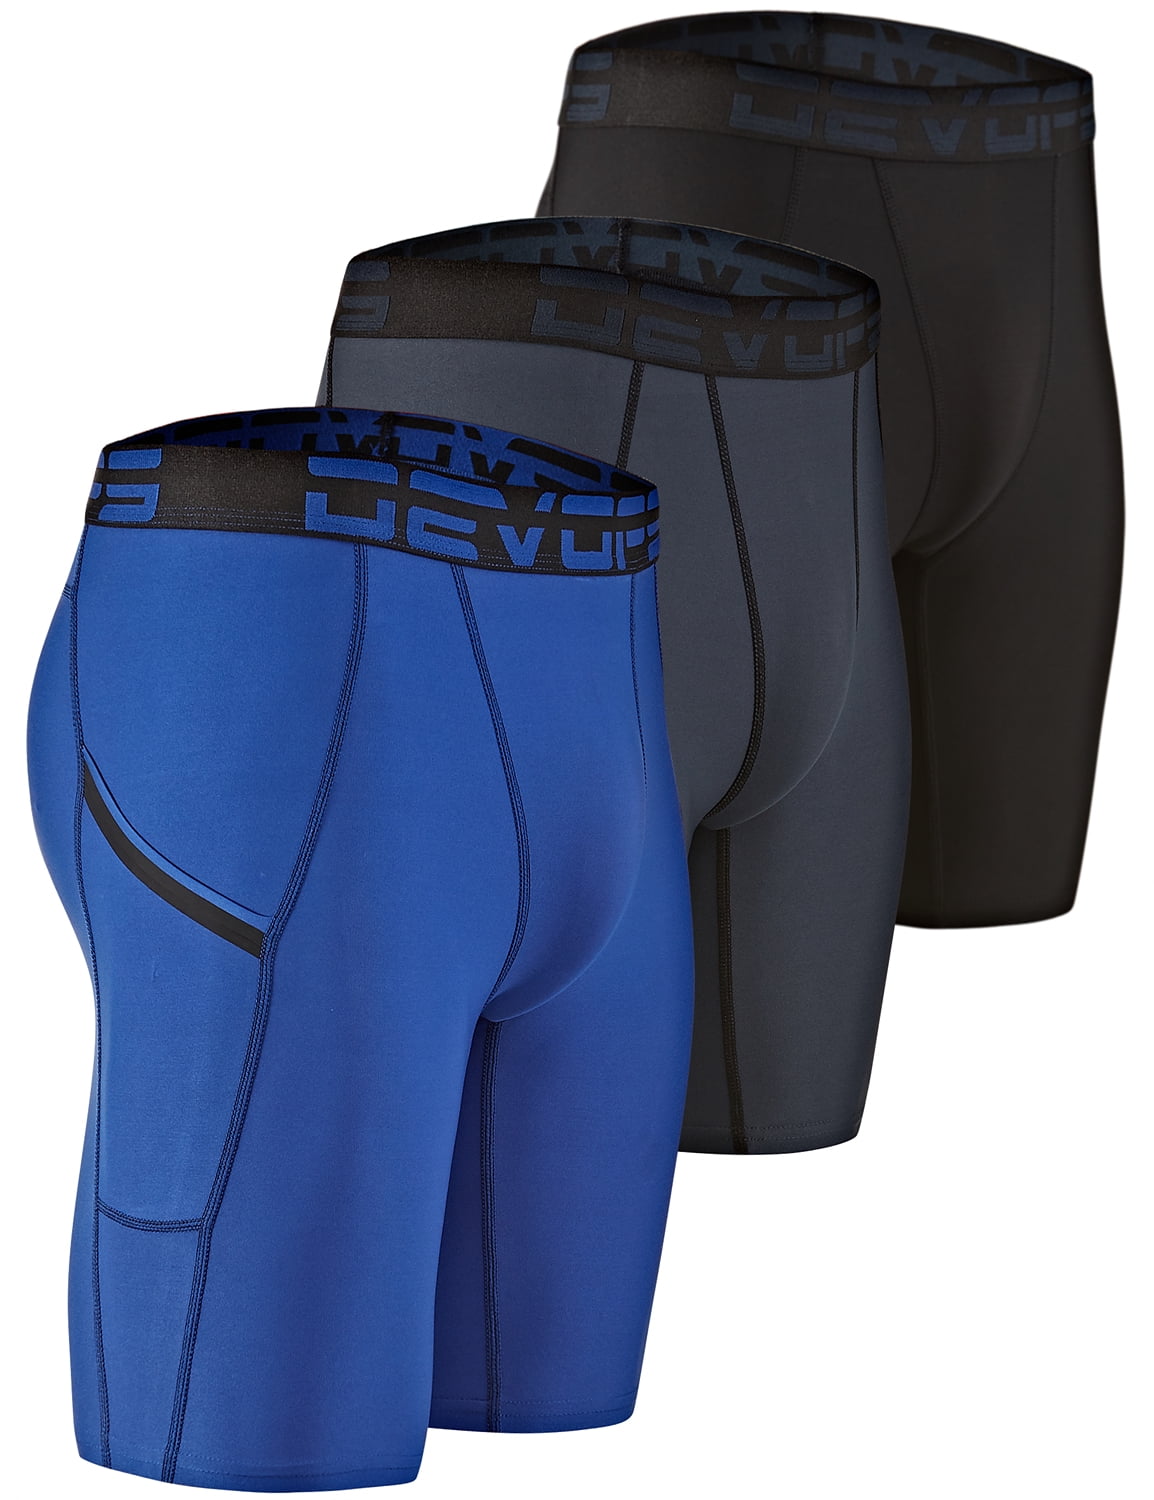 DEVOPS 3 Pack Men's Compression Shorts Underwear With Pocket (X-Large,  Black/Charcoal/Navy) 